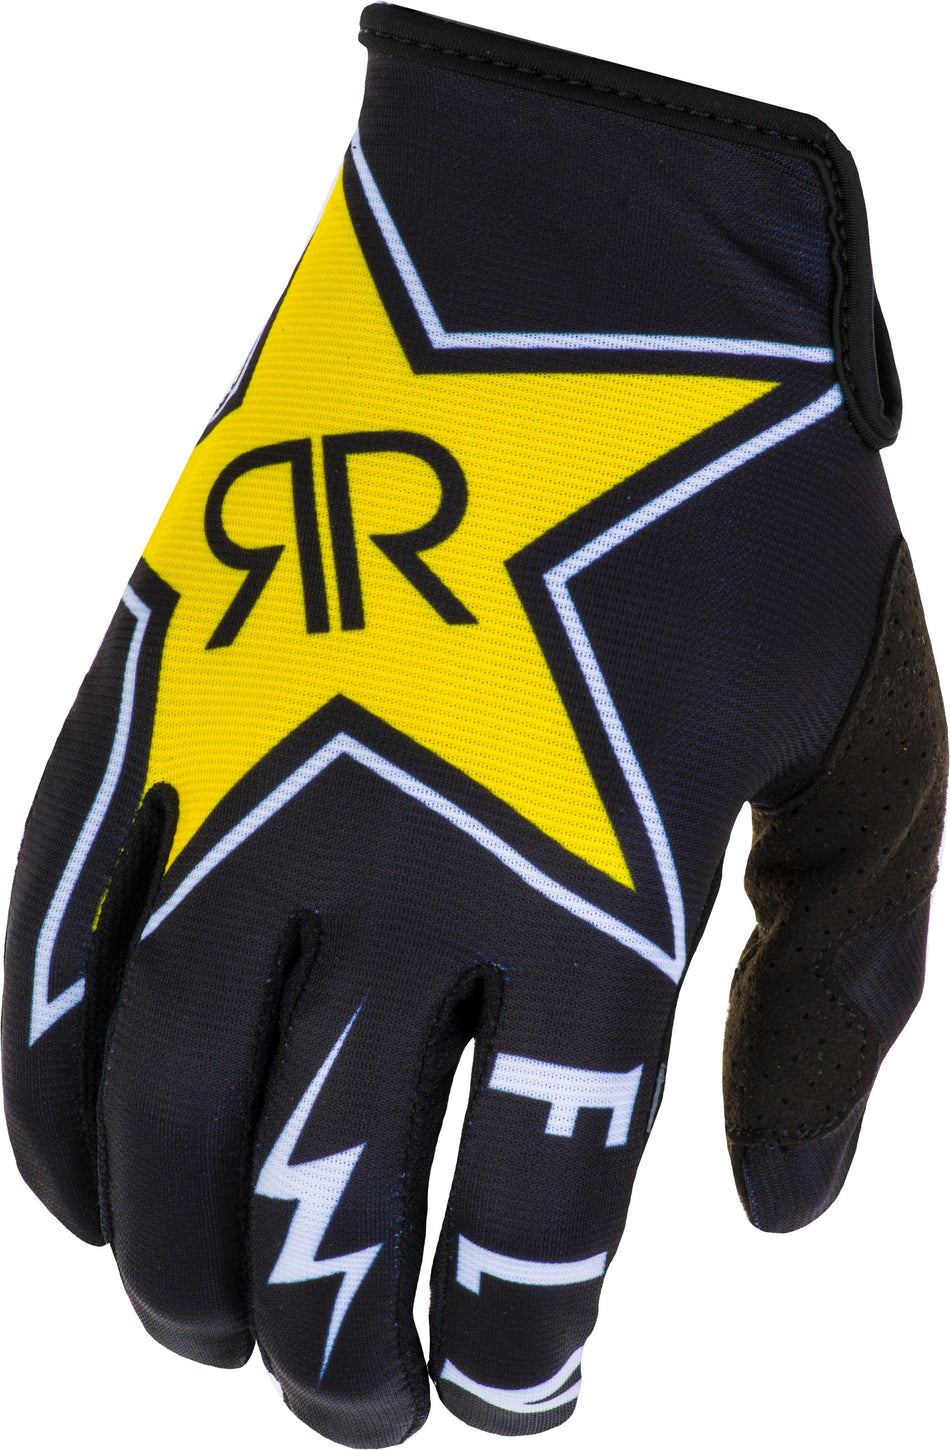 FLY RACING Lite Rockstar Gloves Black/White Sz 13 373-01313